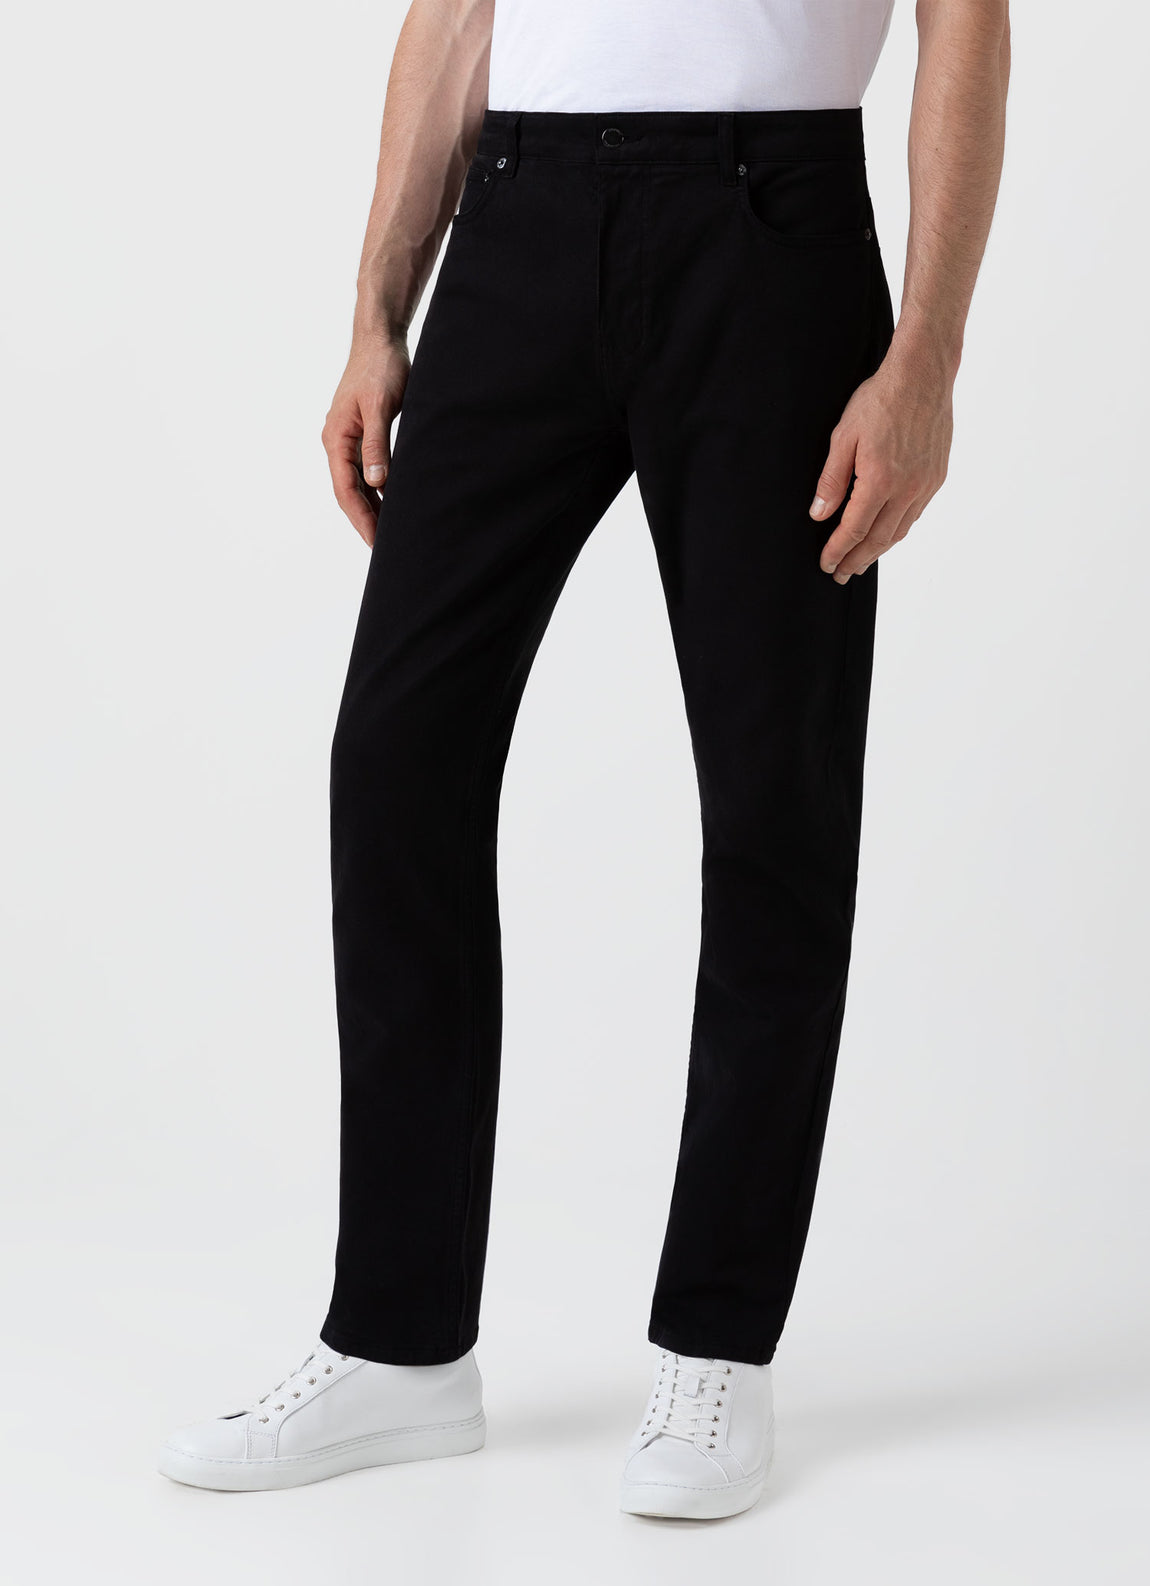 Men's Cotton Drill 5 Pocket Trouser in Black | Sunspel